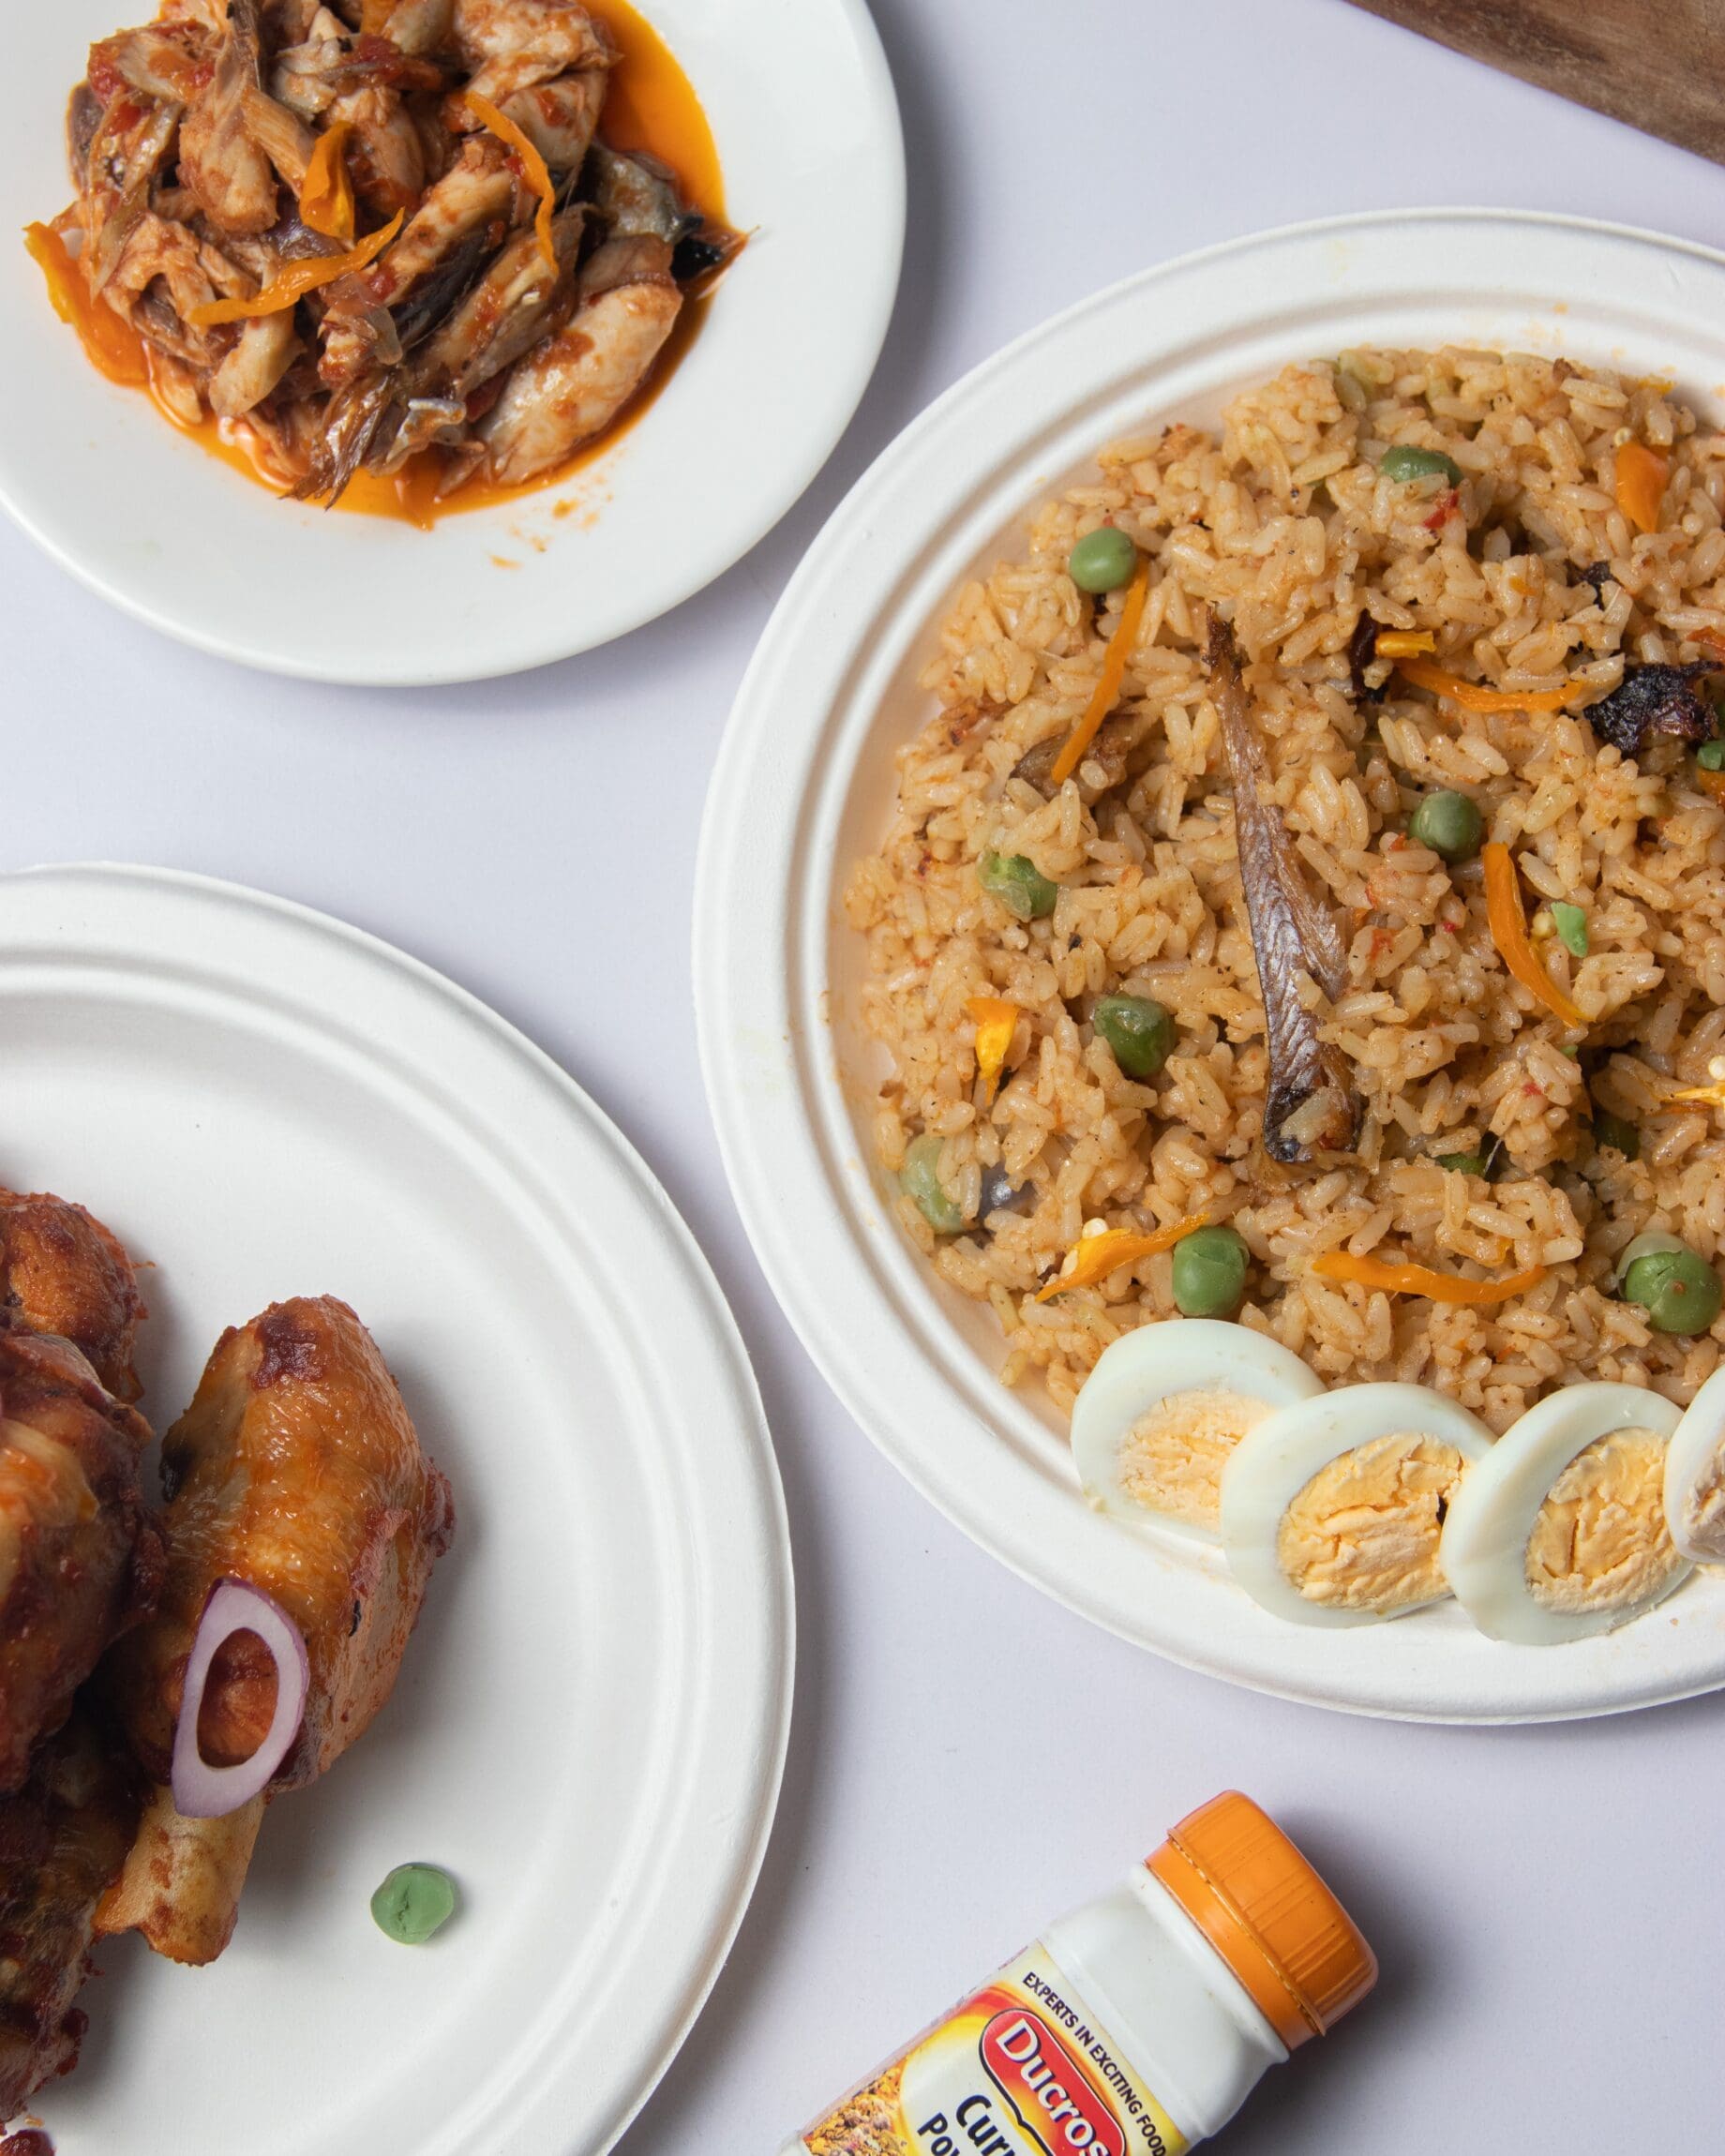 A Yoruba girl’s guide to the holiday season in Lagos | A plate of Jollof Rice